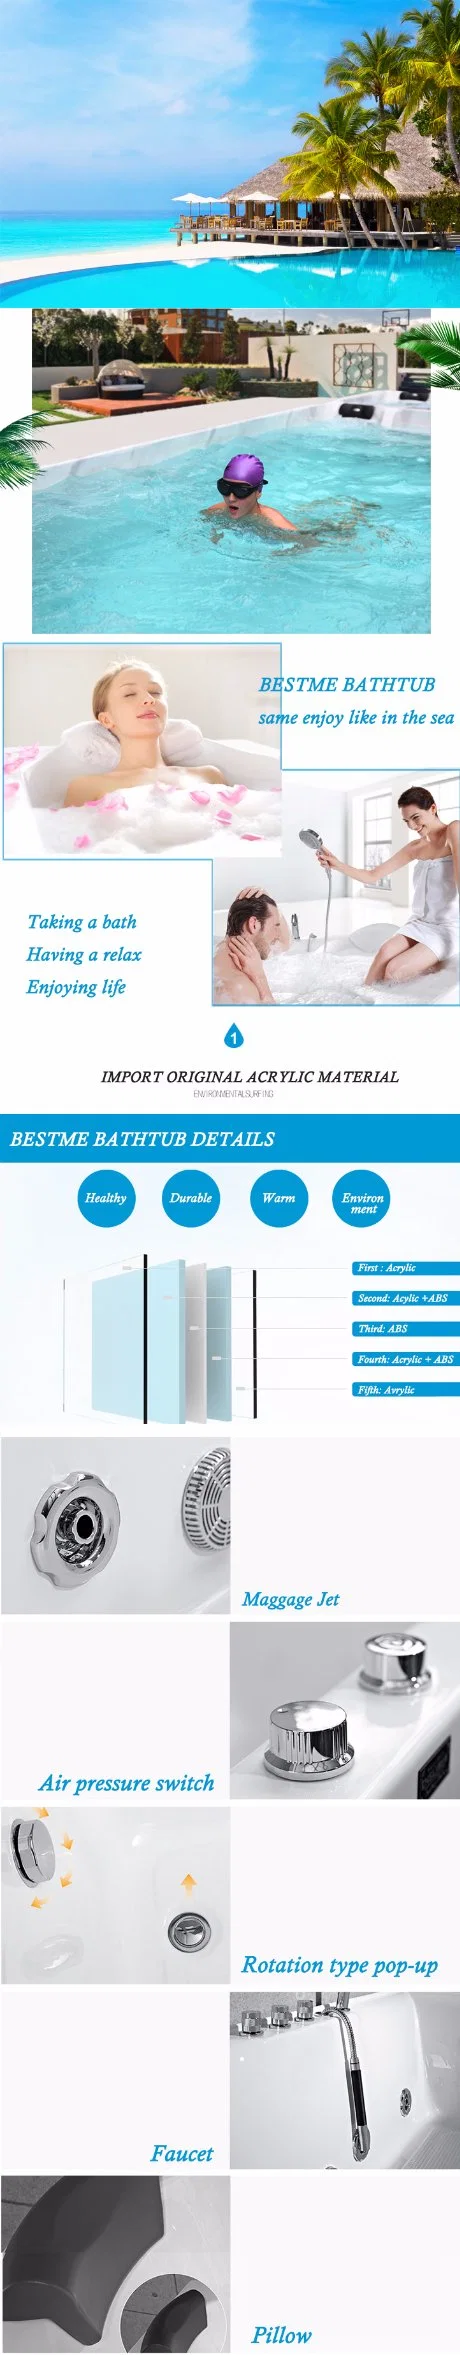 Hot Sales Bathroom Triangle Acrylict Bathroom Massage Jacuzzi Bath SPA Tub (BT-A1027)